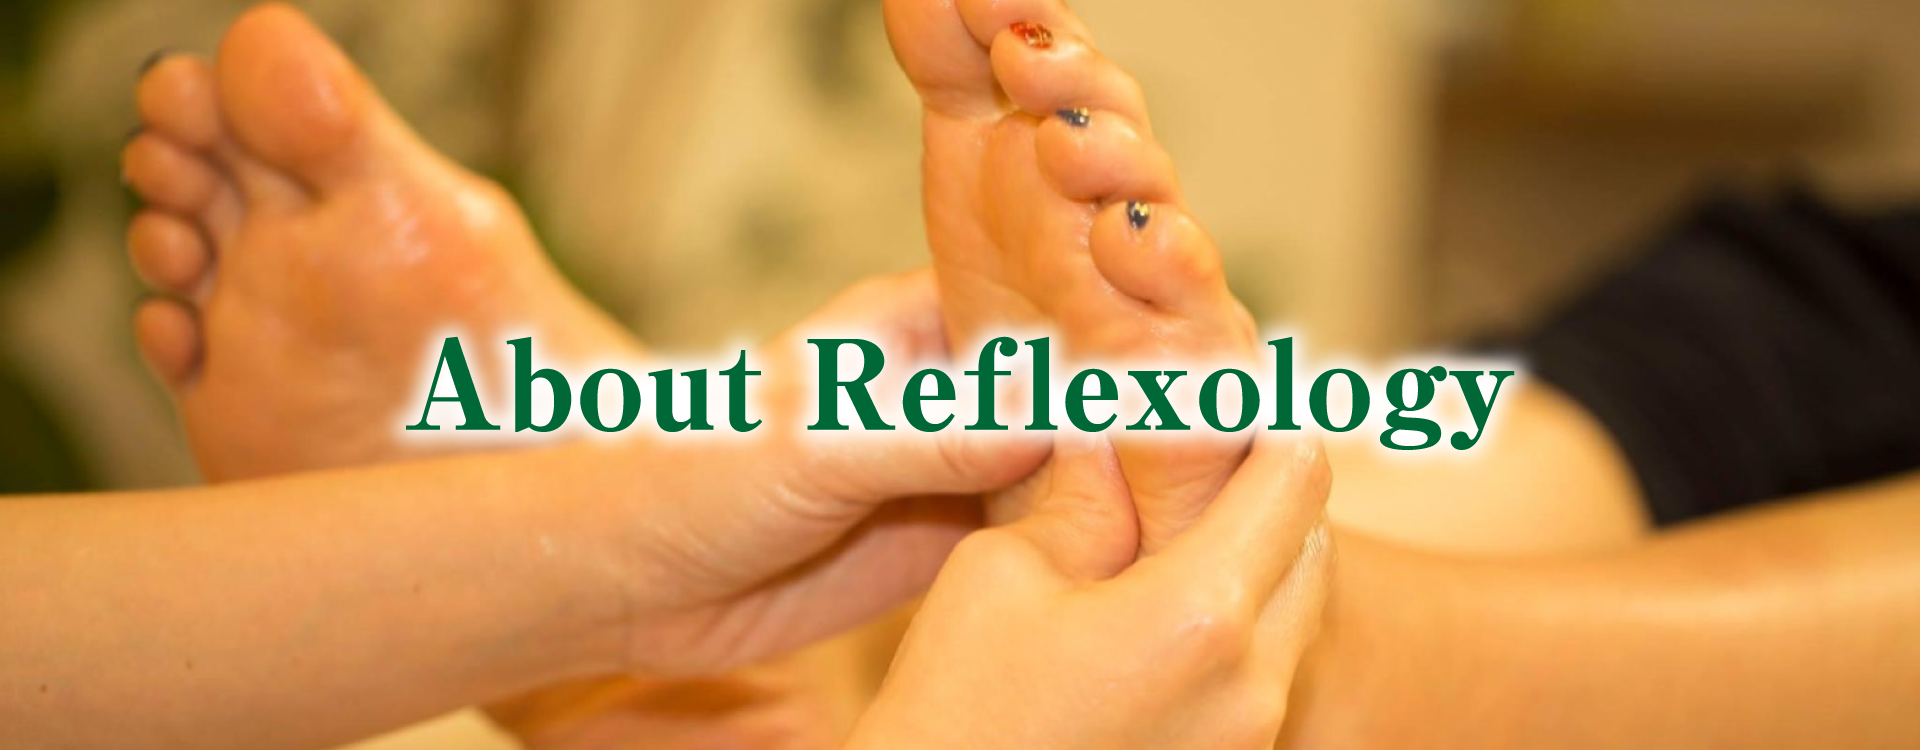 About Reflexology